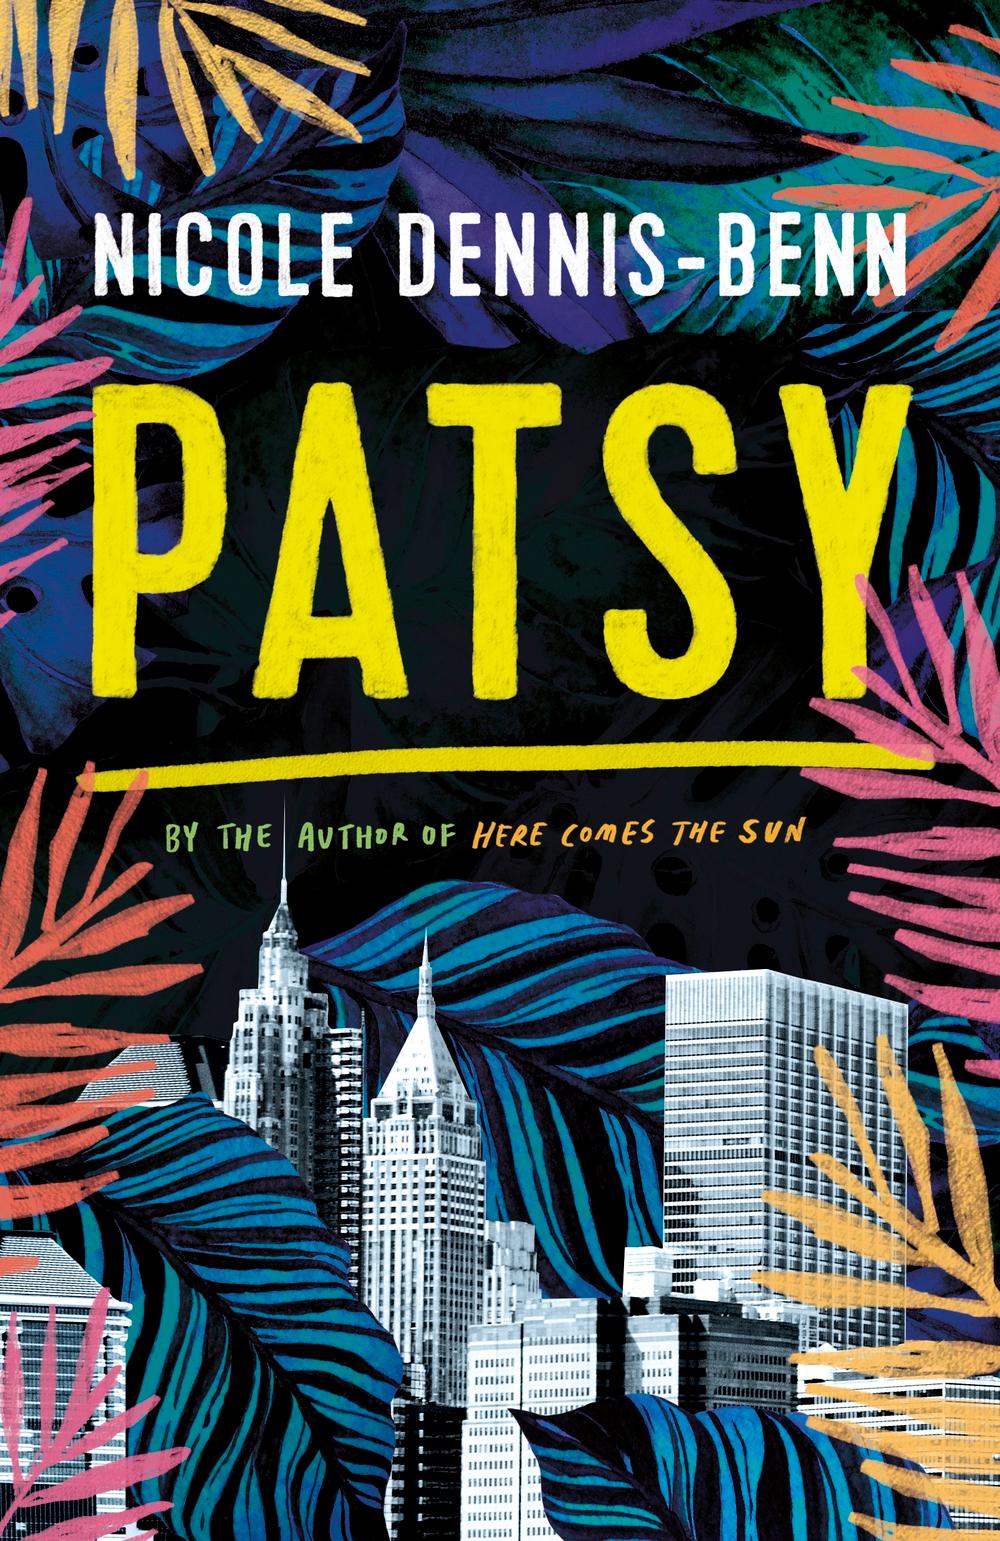 Patsy - Nicole Dennis-Benn